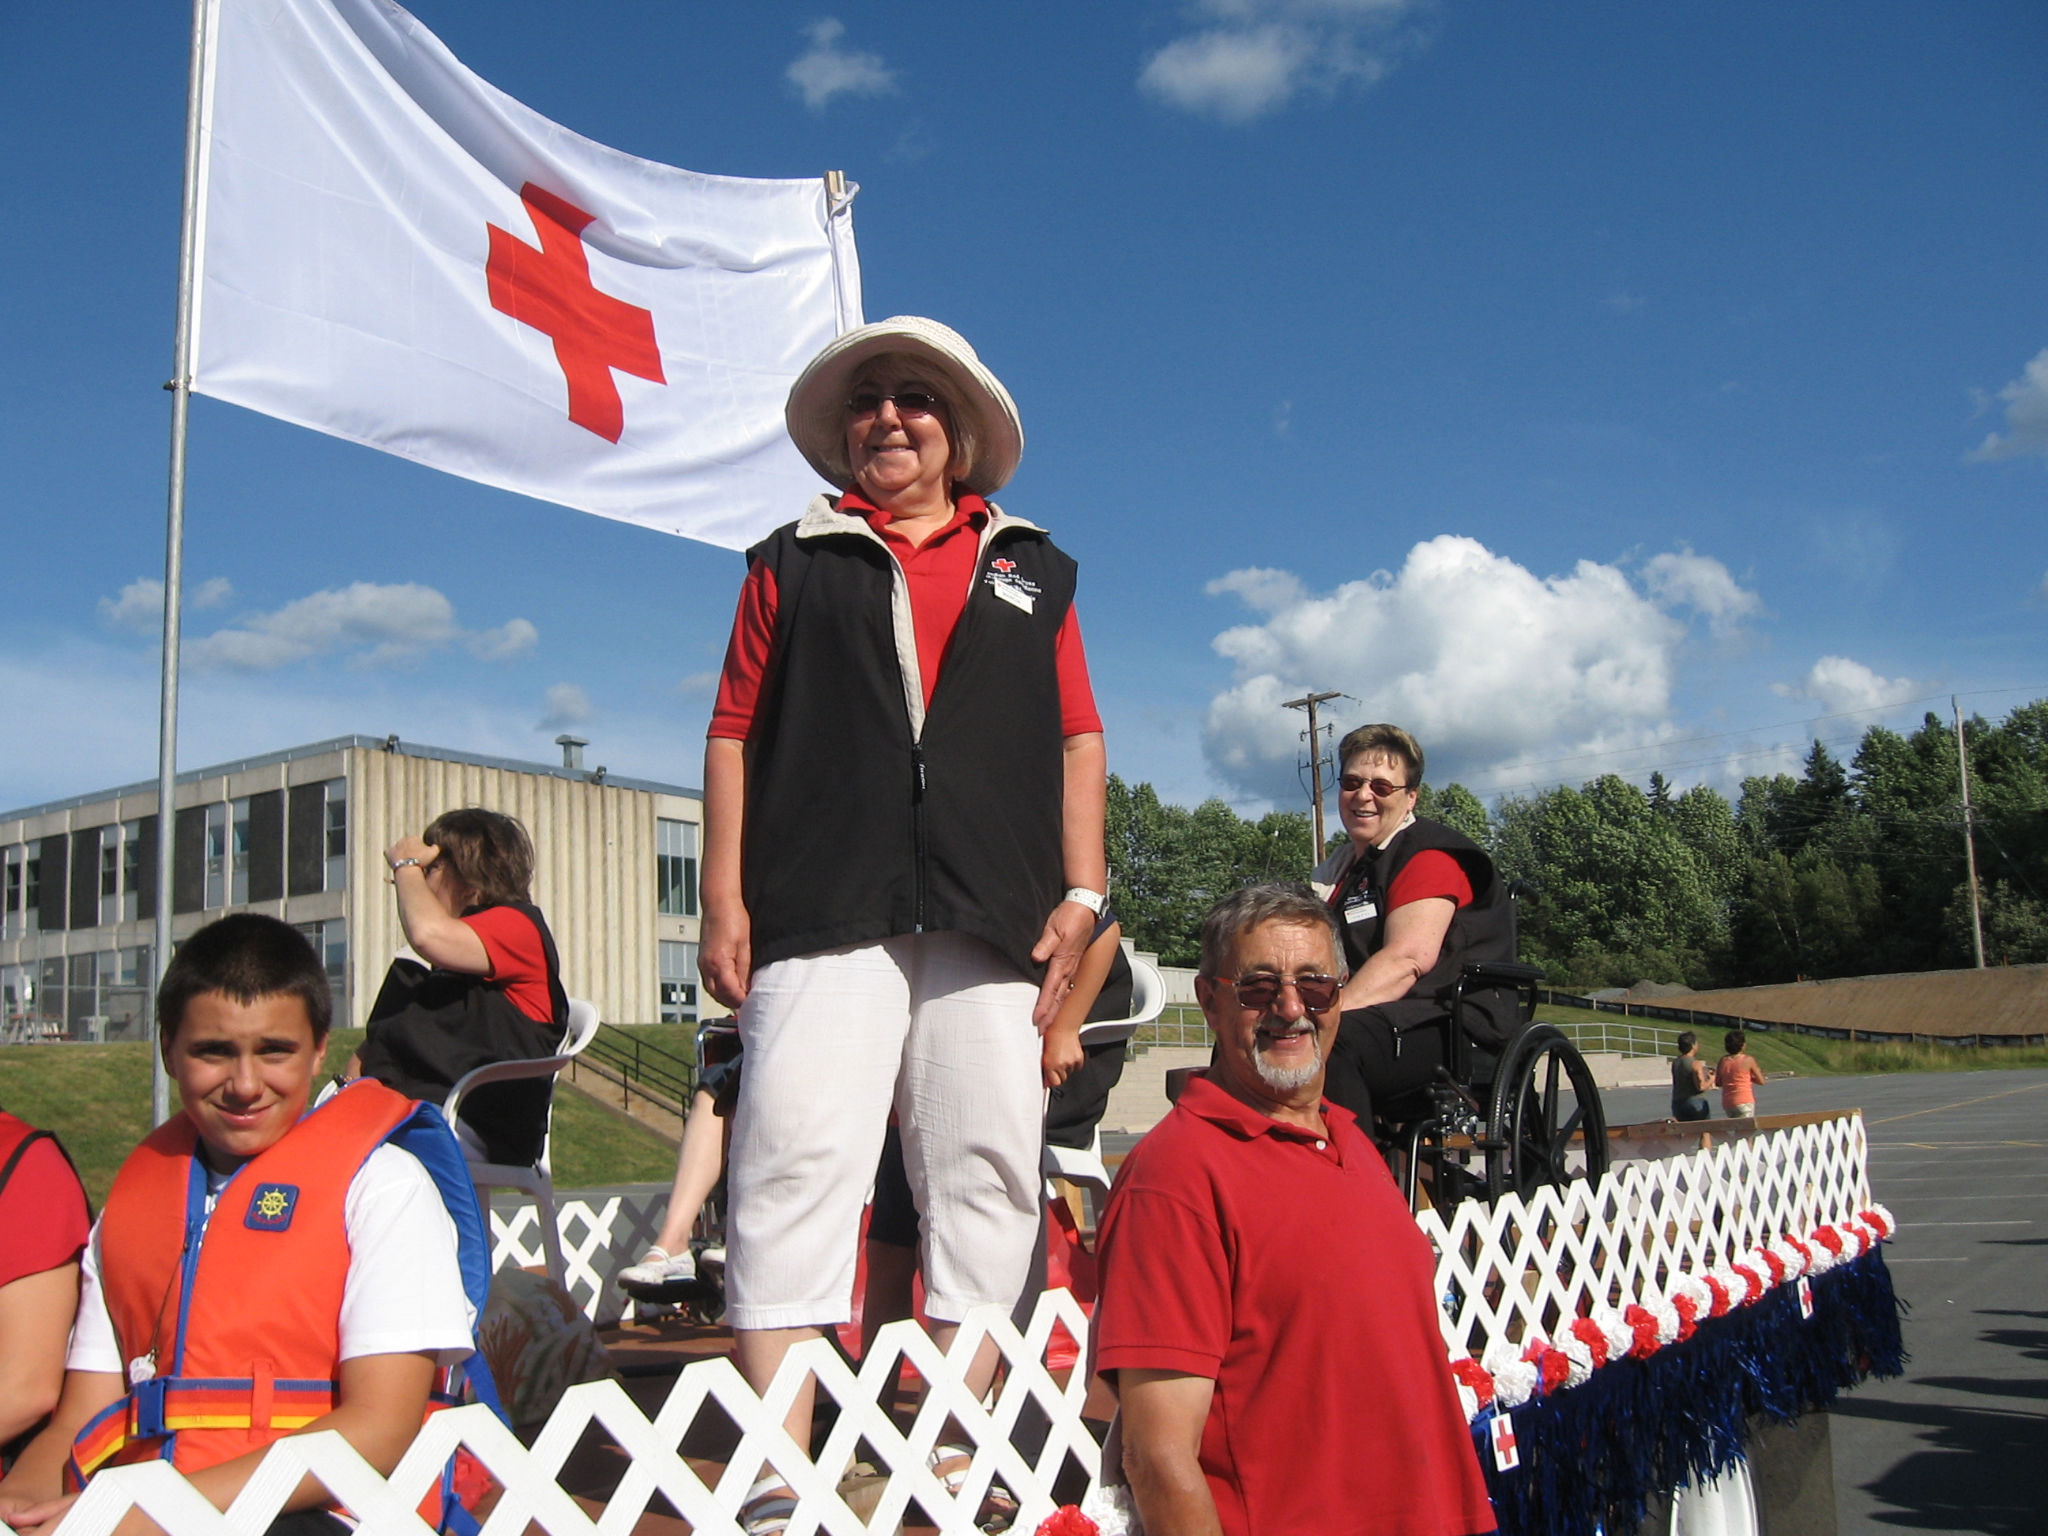 Red Cross float in Bridgewater parade